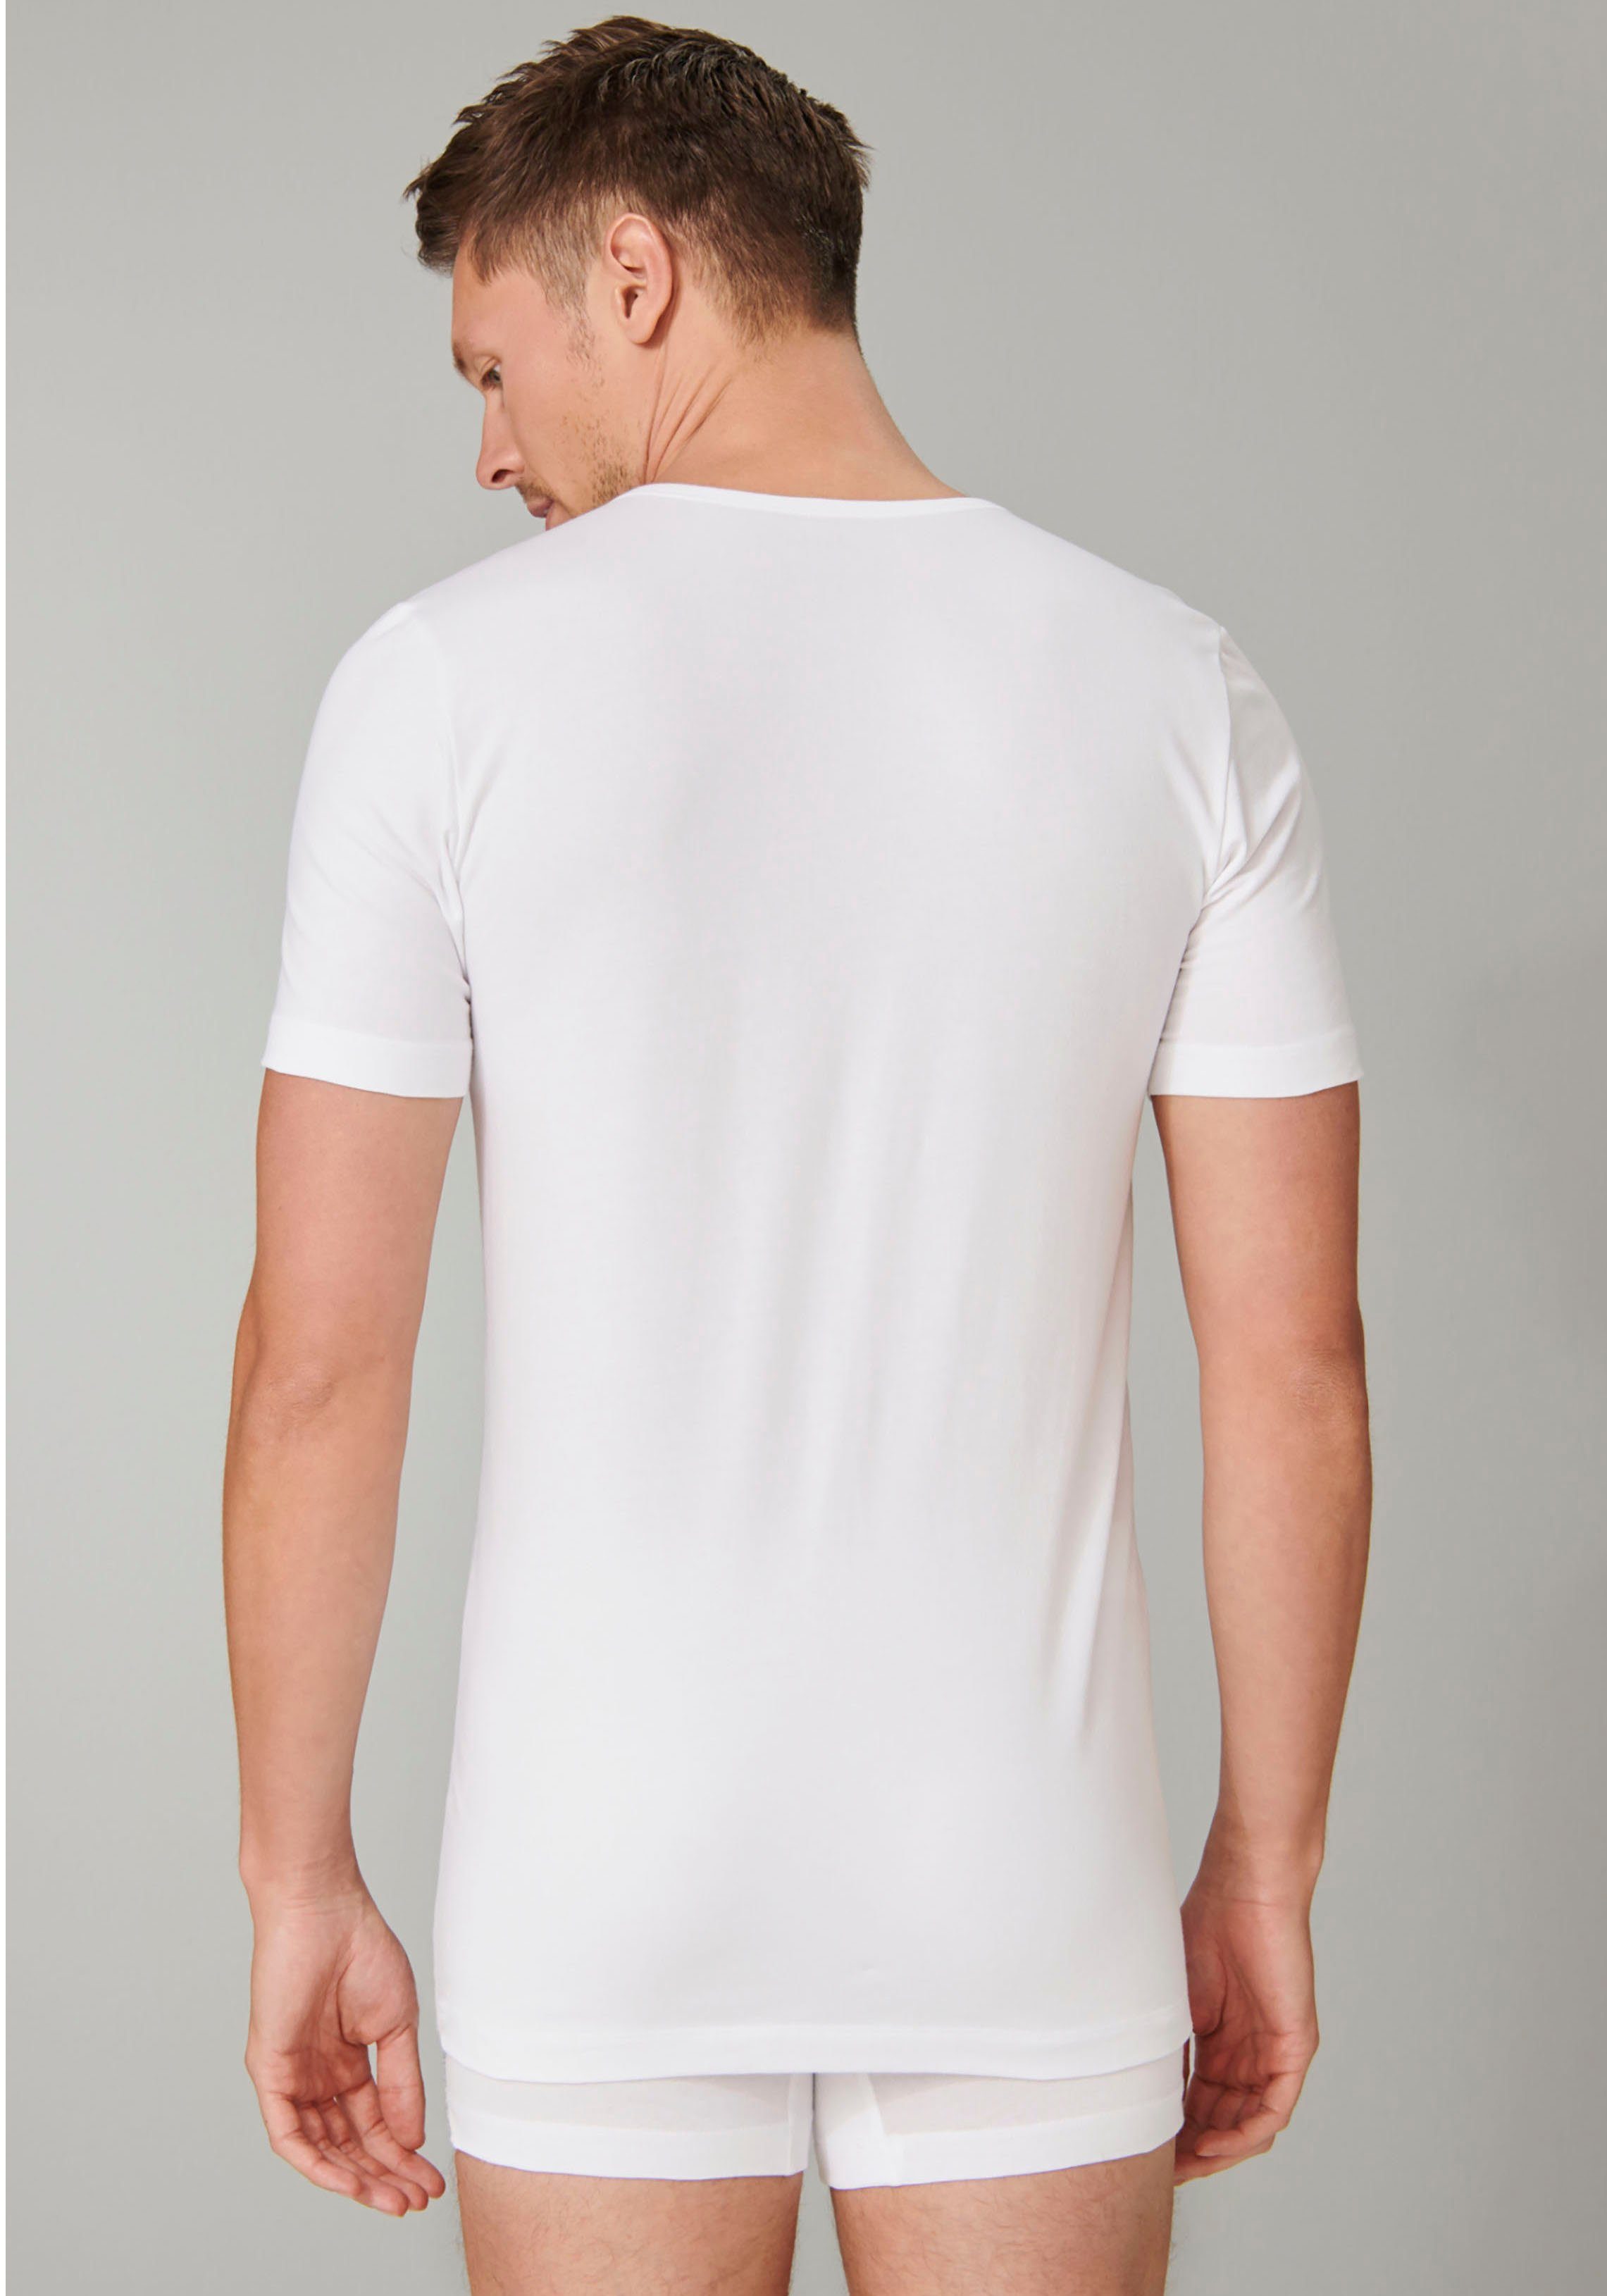 mit weiß (2er-Pack) Schiesser V-Ausschnitt V-Shirt